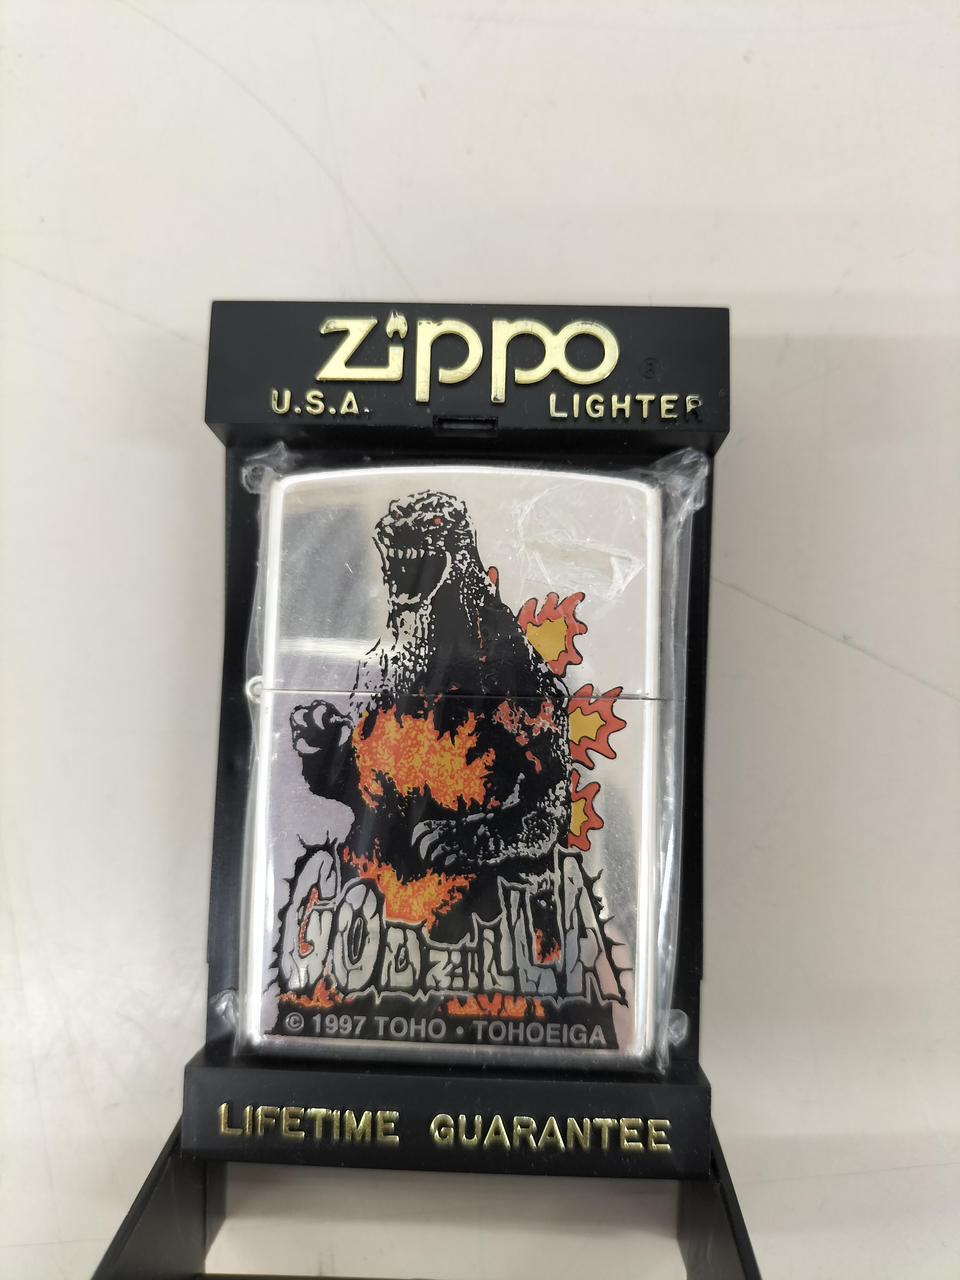 Zippo lighter GODZILLA King Monster TOHO unused item imported from Japan